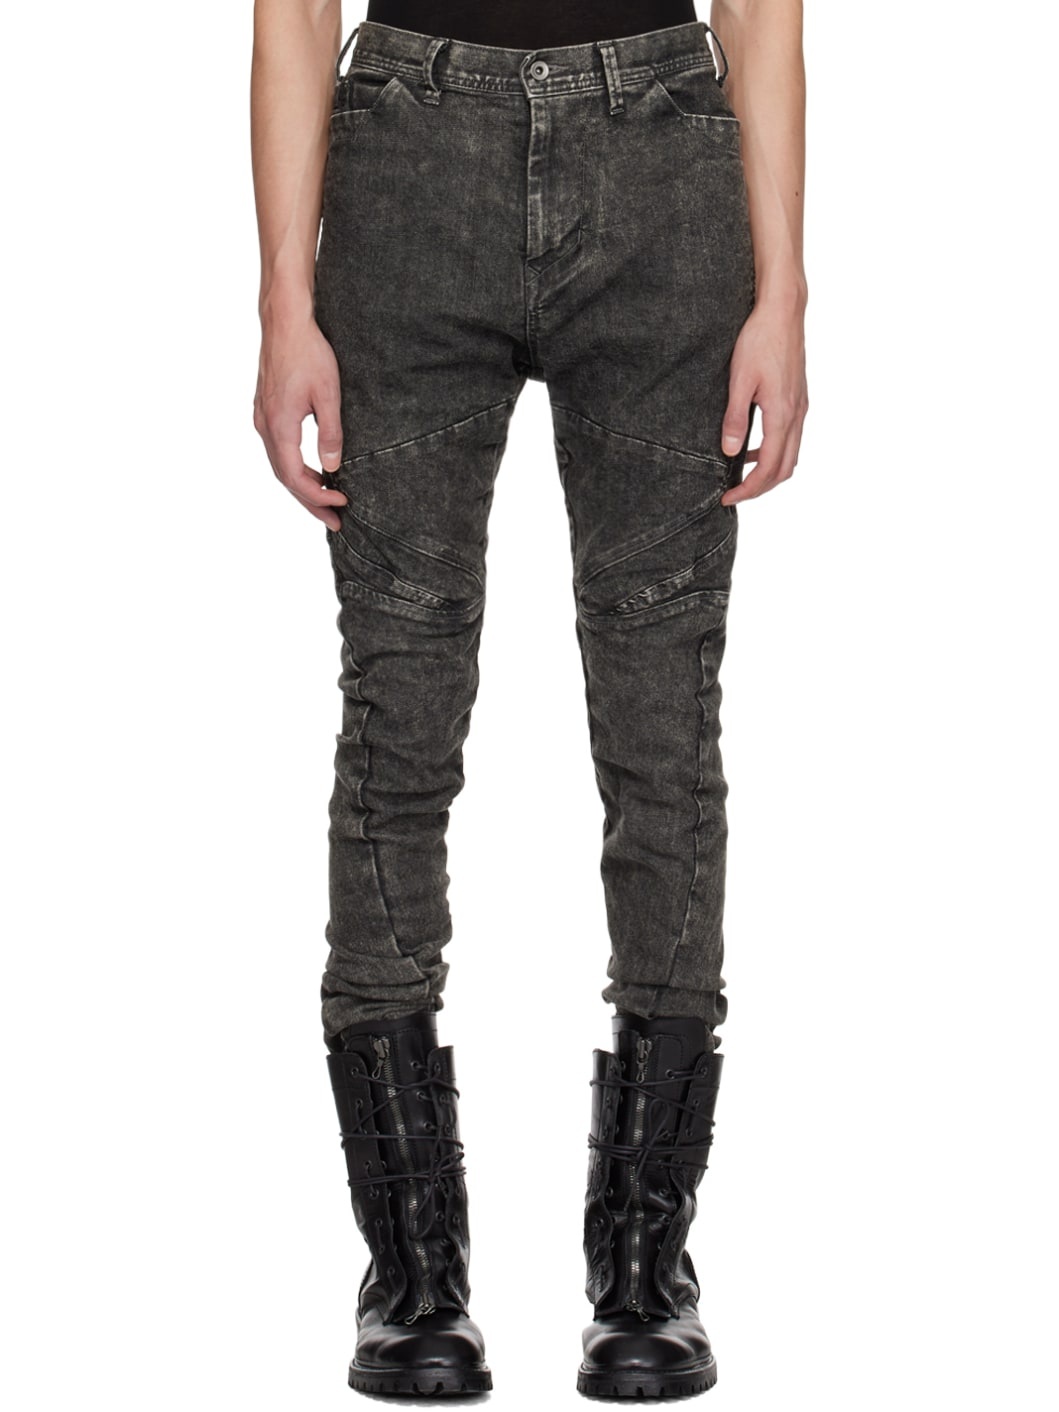 Gray Rider Jeans - 1